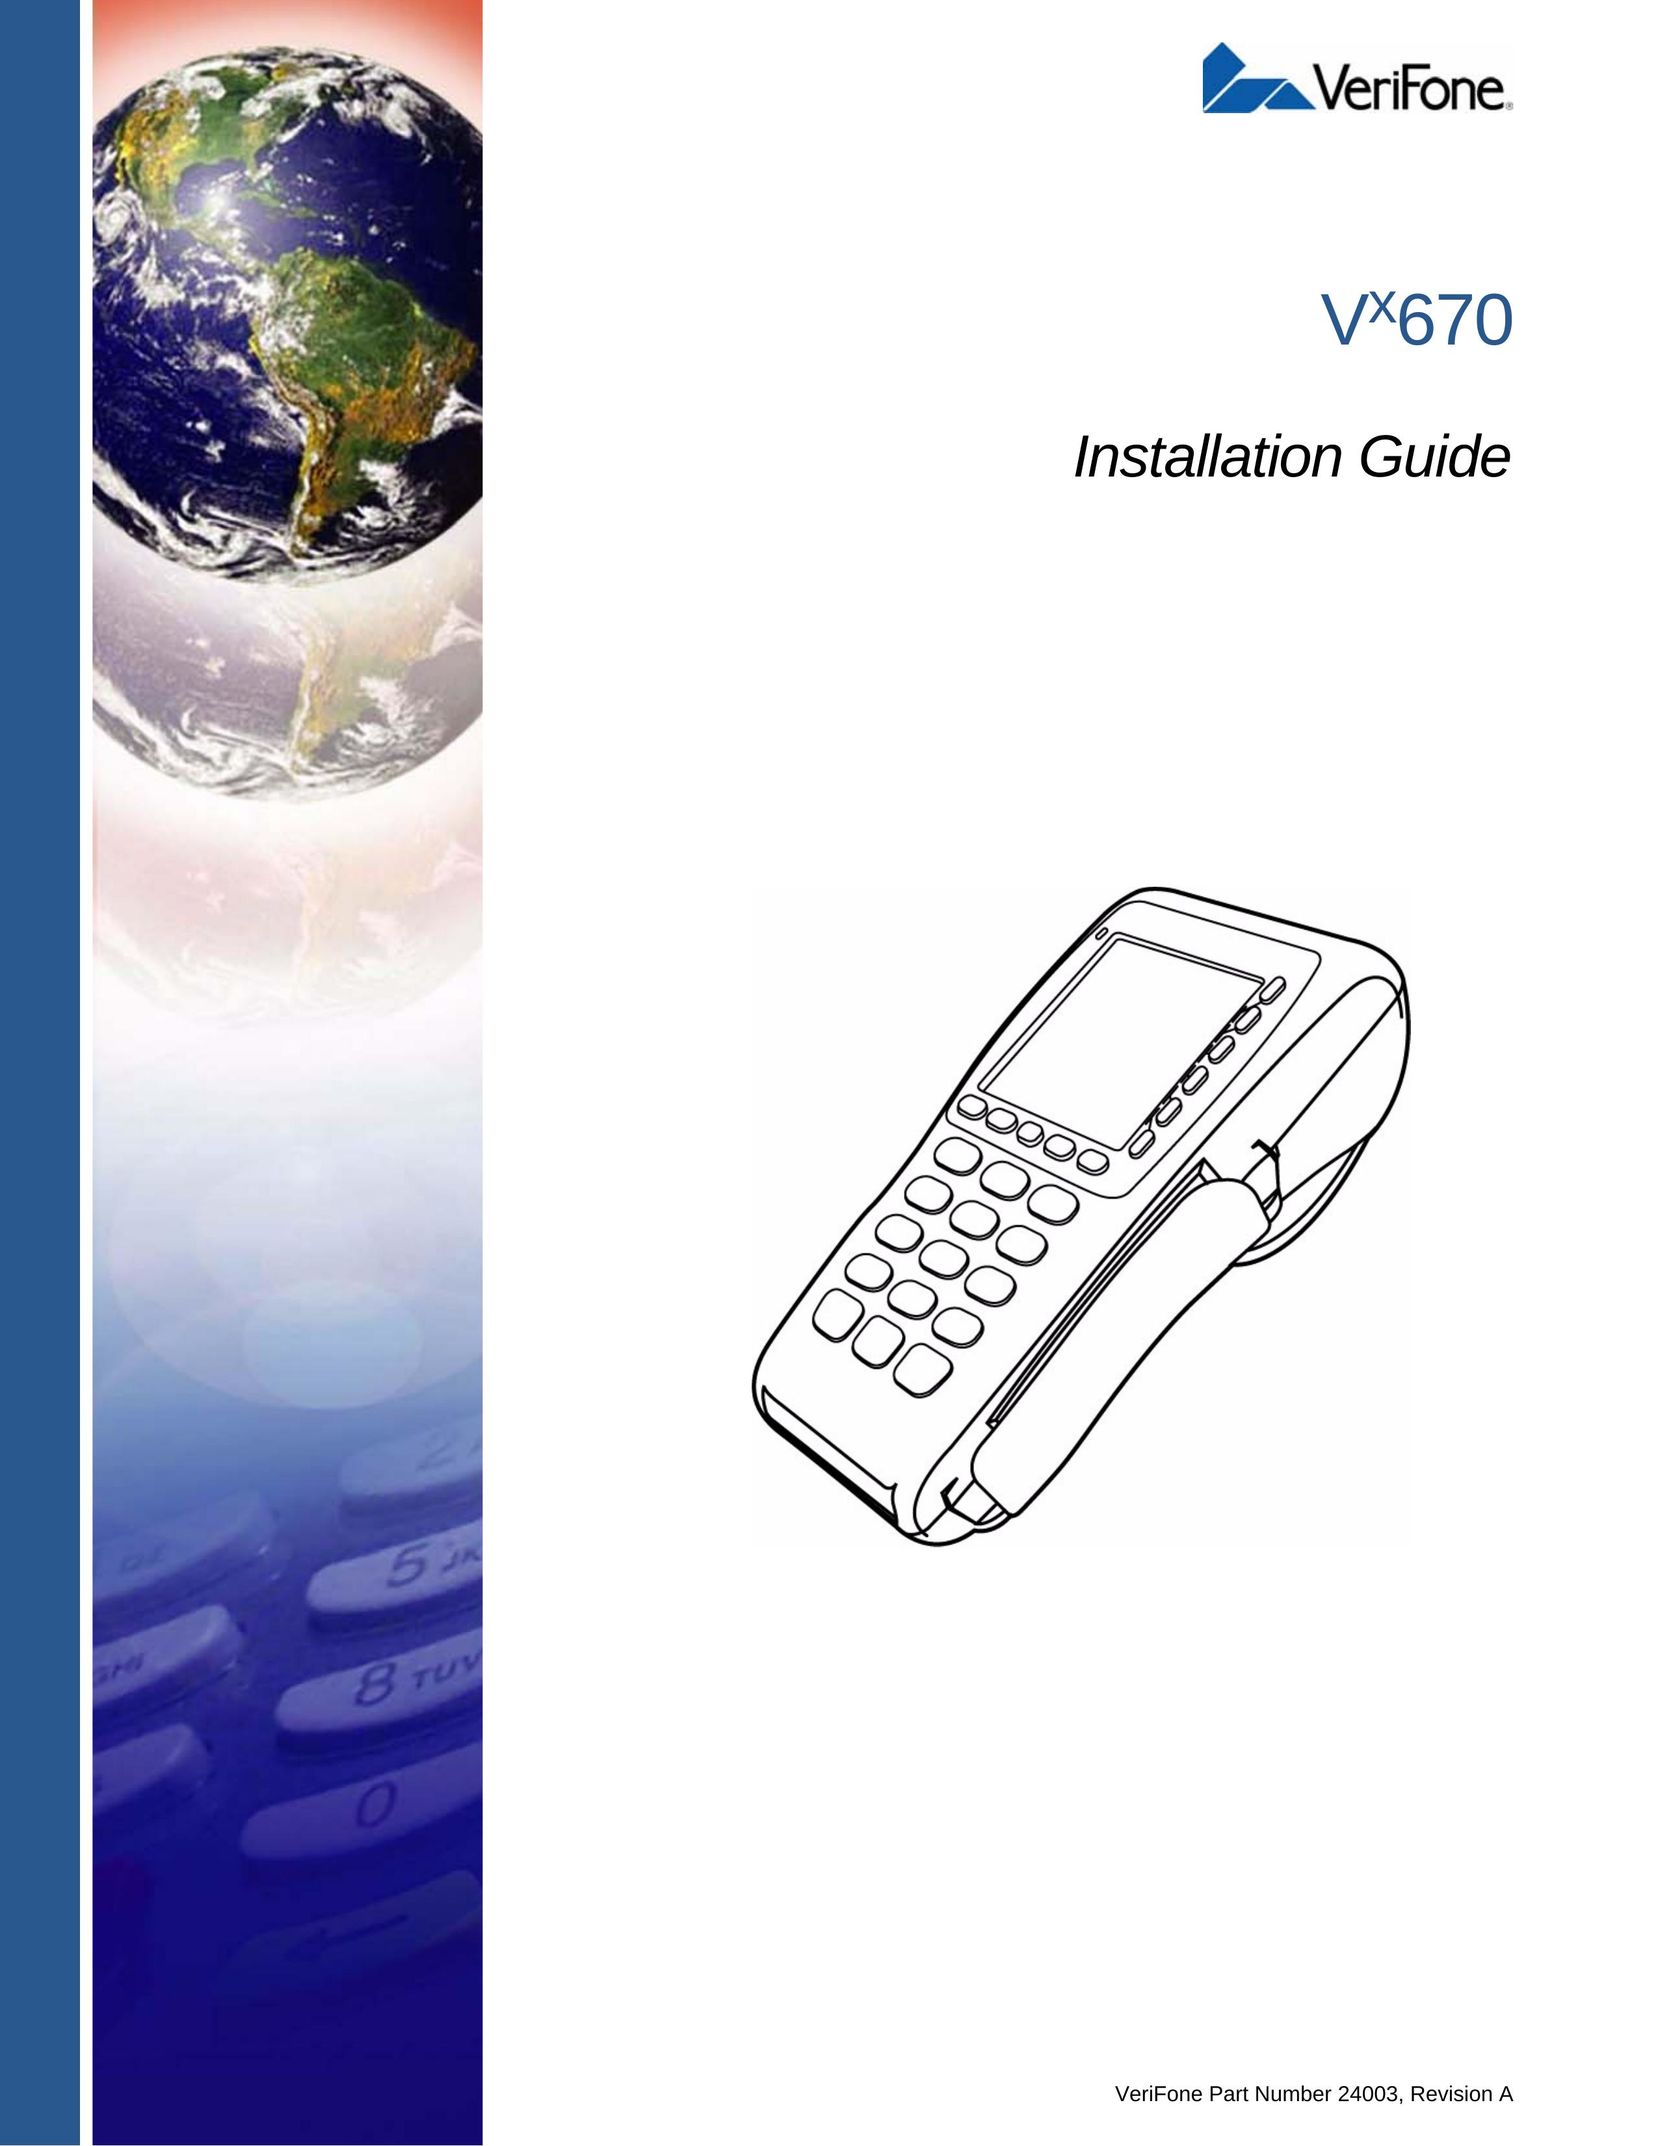 VeriFone Vx670 Video Gaming Accessories User Manual